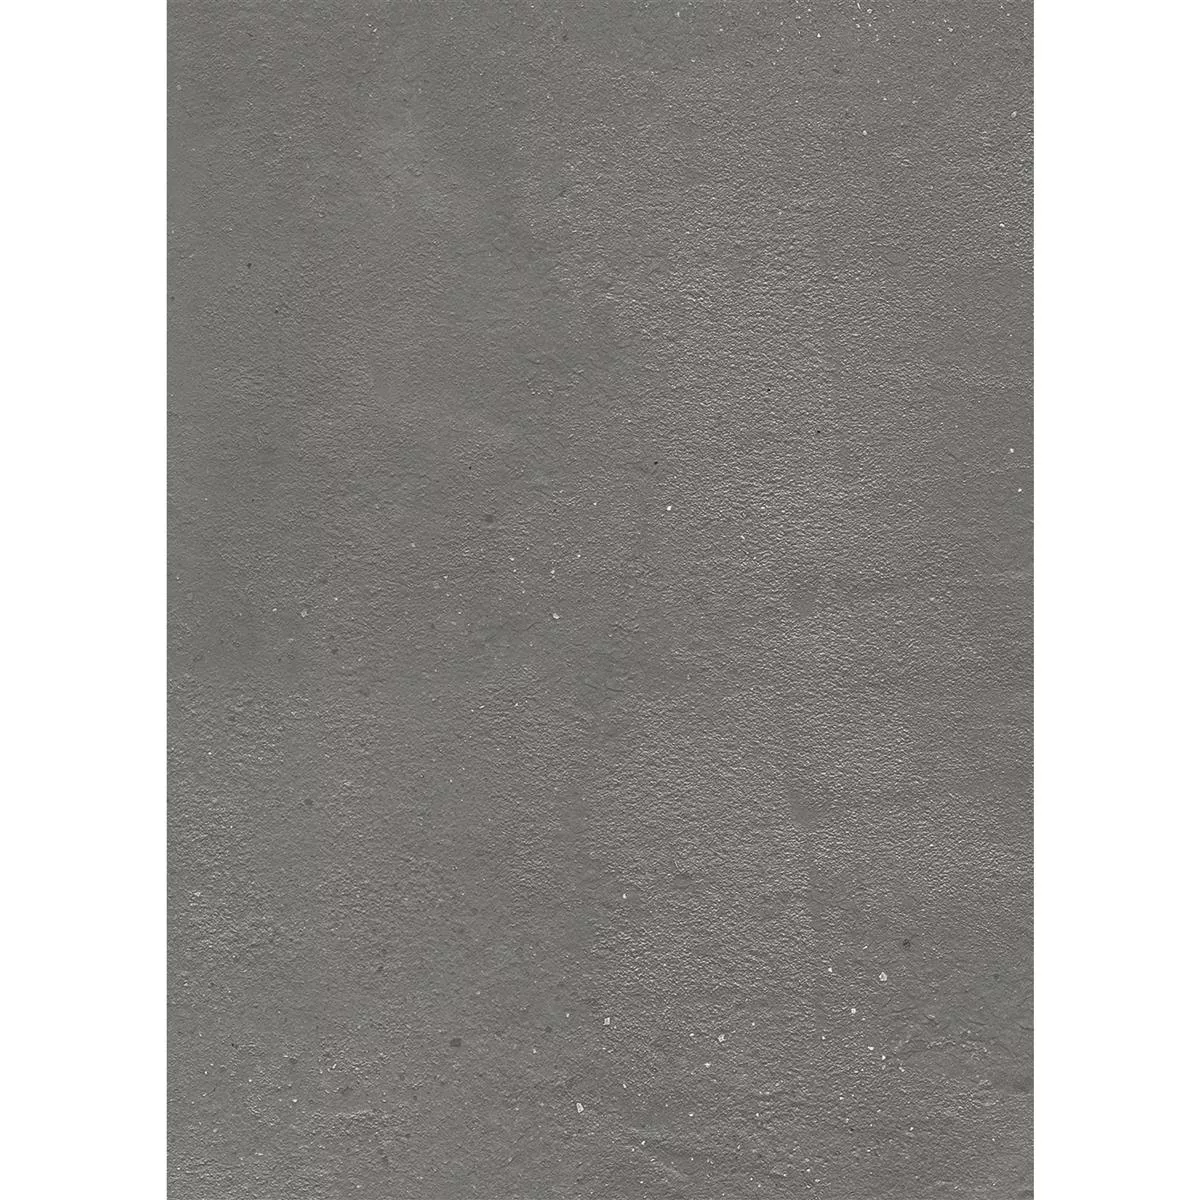 Ladrilho Malibu Olhar Concreto Cinza 60x120cm